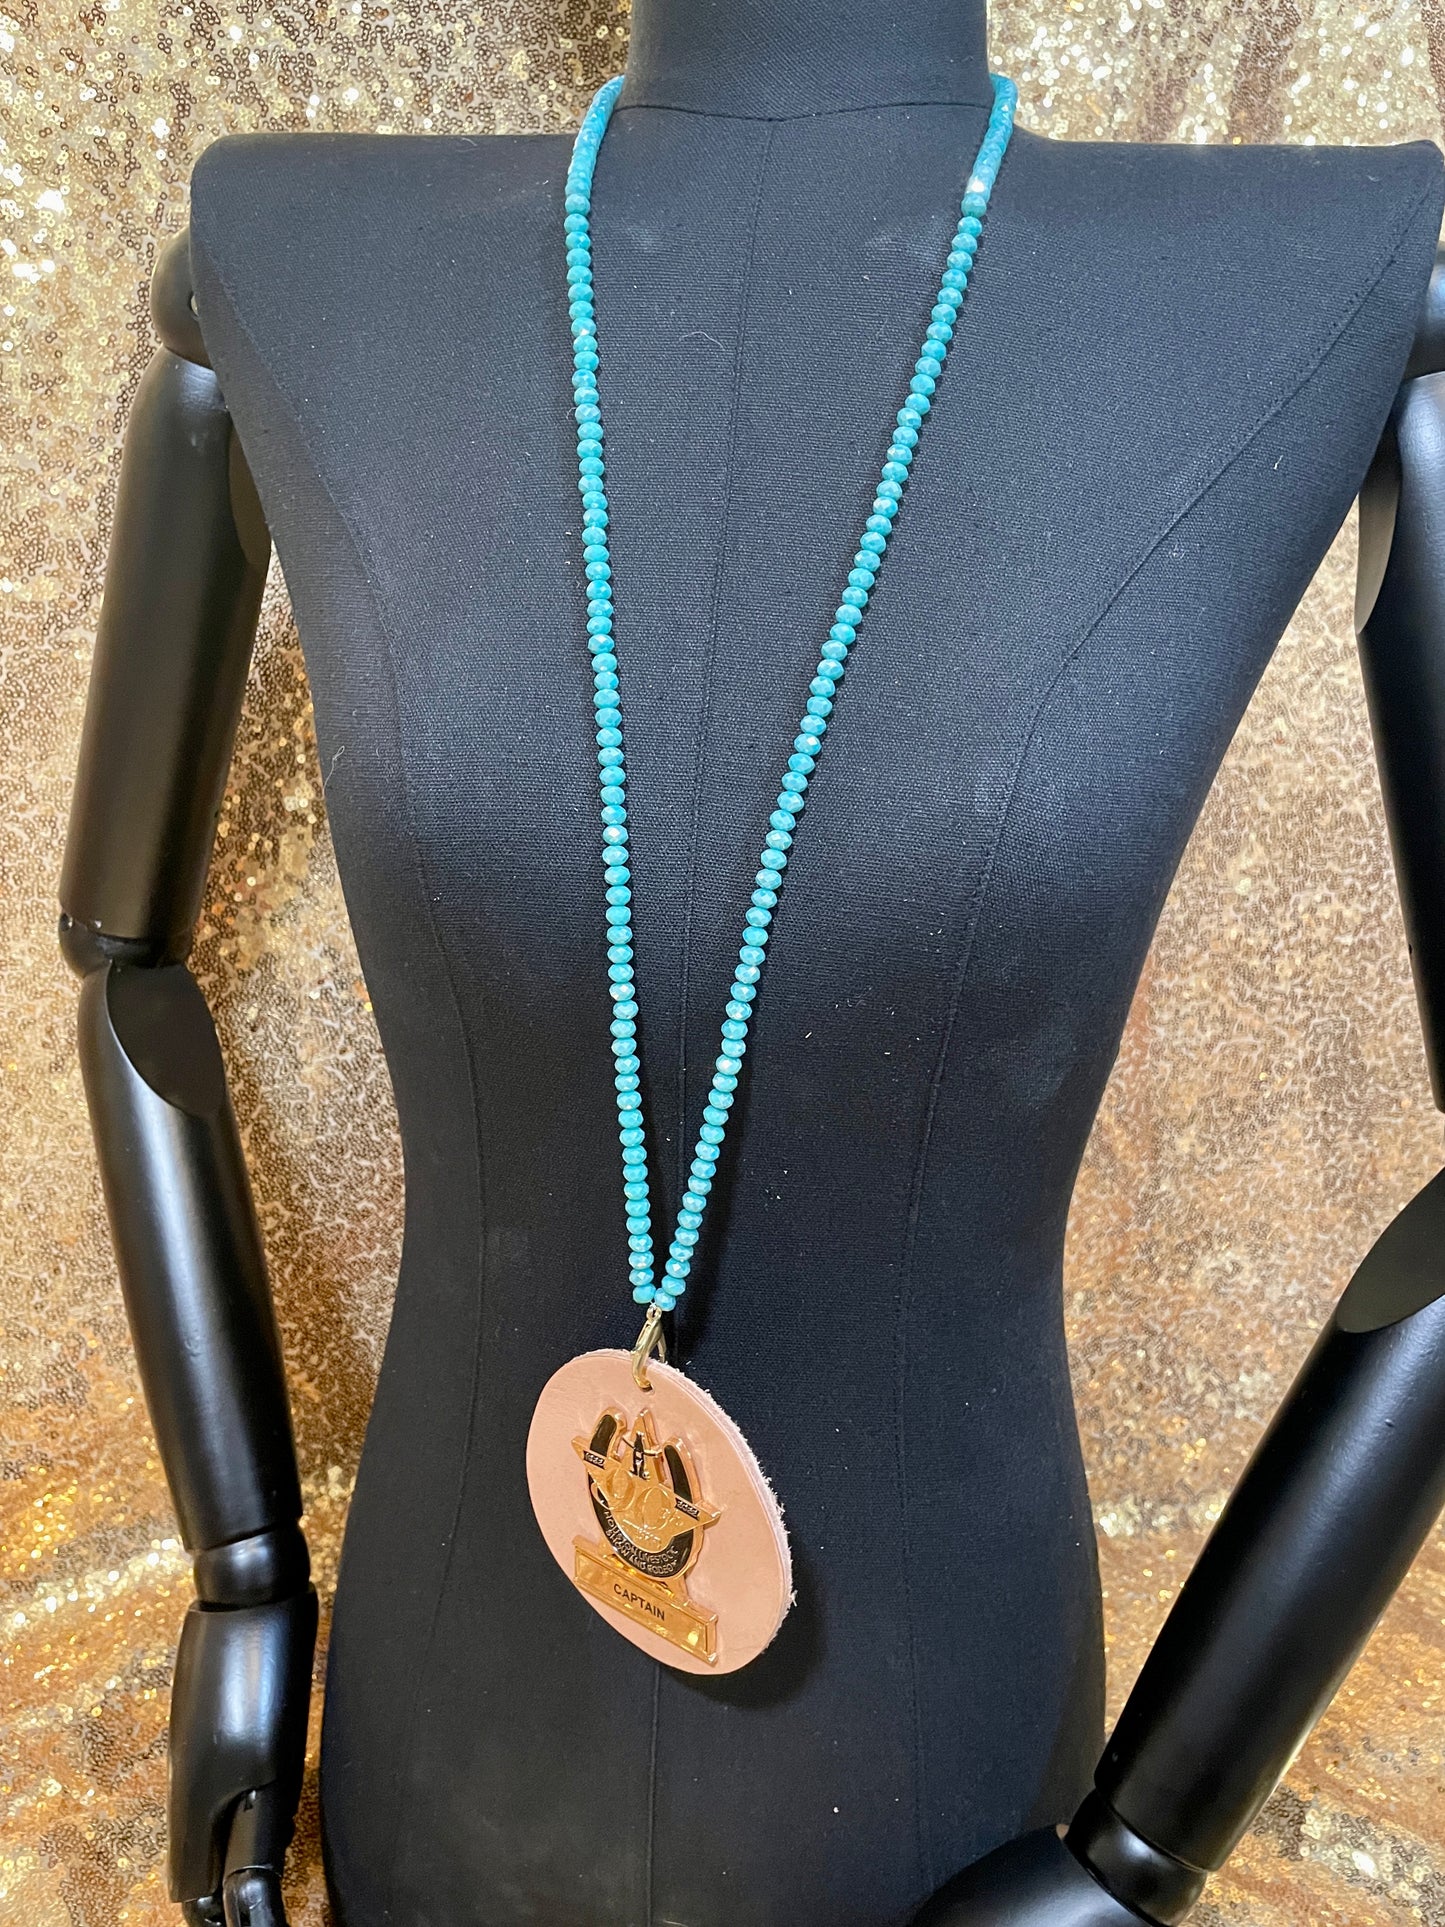 Turquoise Iridescent Crystal Volunteer Badge Holder